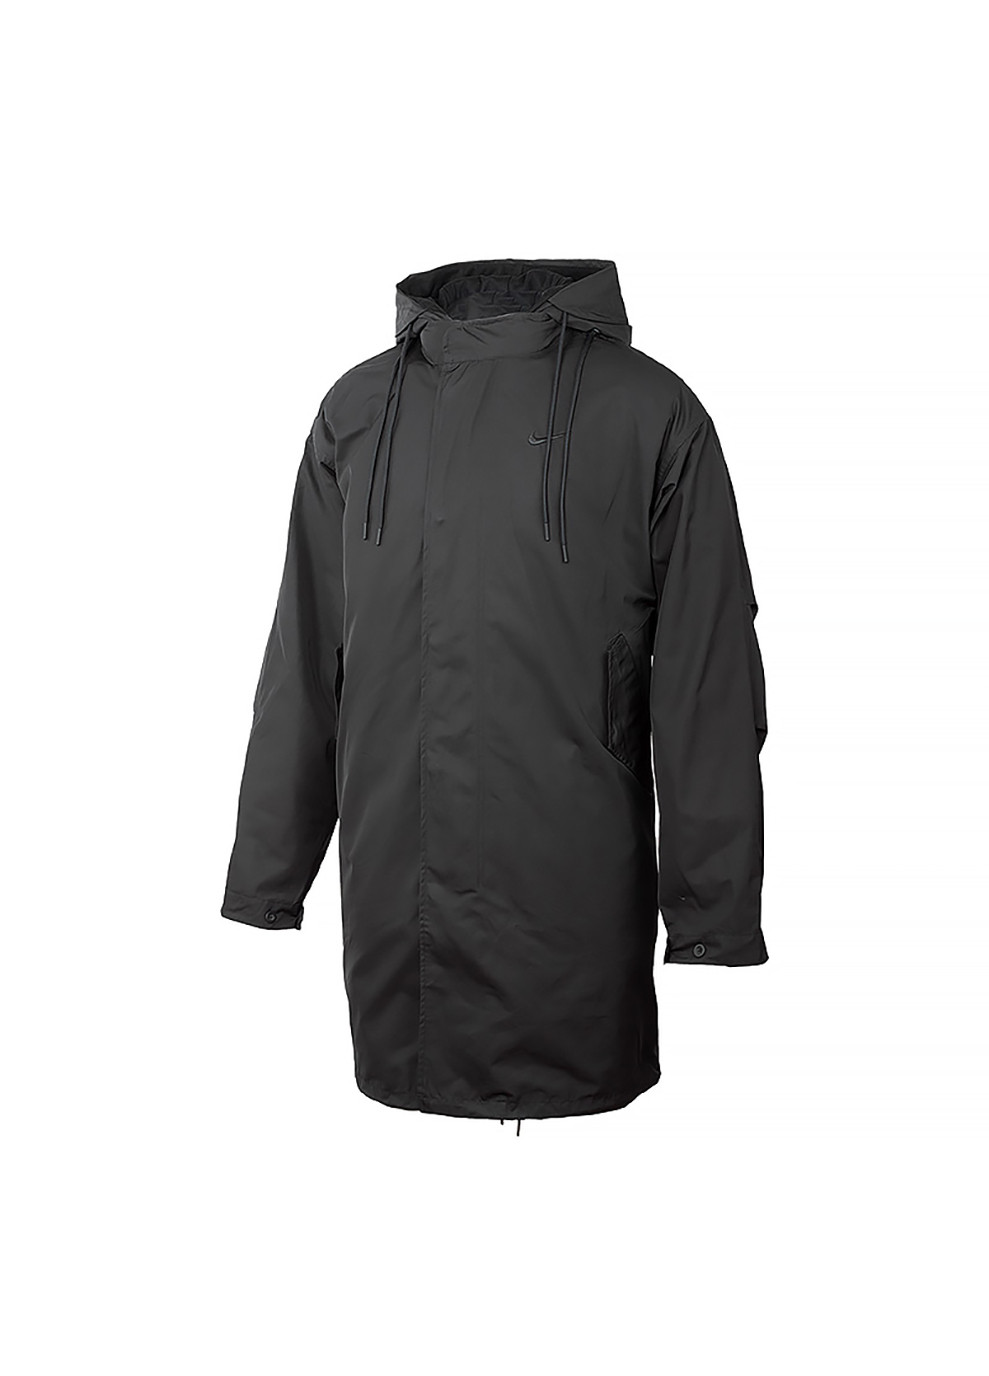 Черная демисезонная мужская куртка m nl tf 3in1 parka черный m (dq4926-010 m) Nike